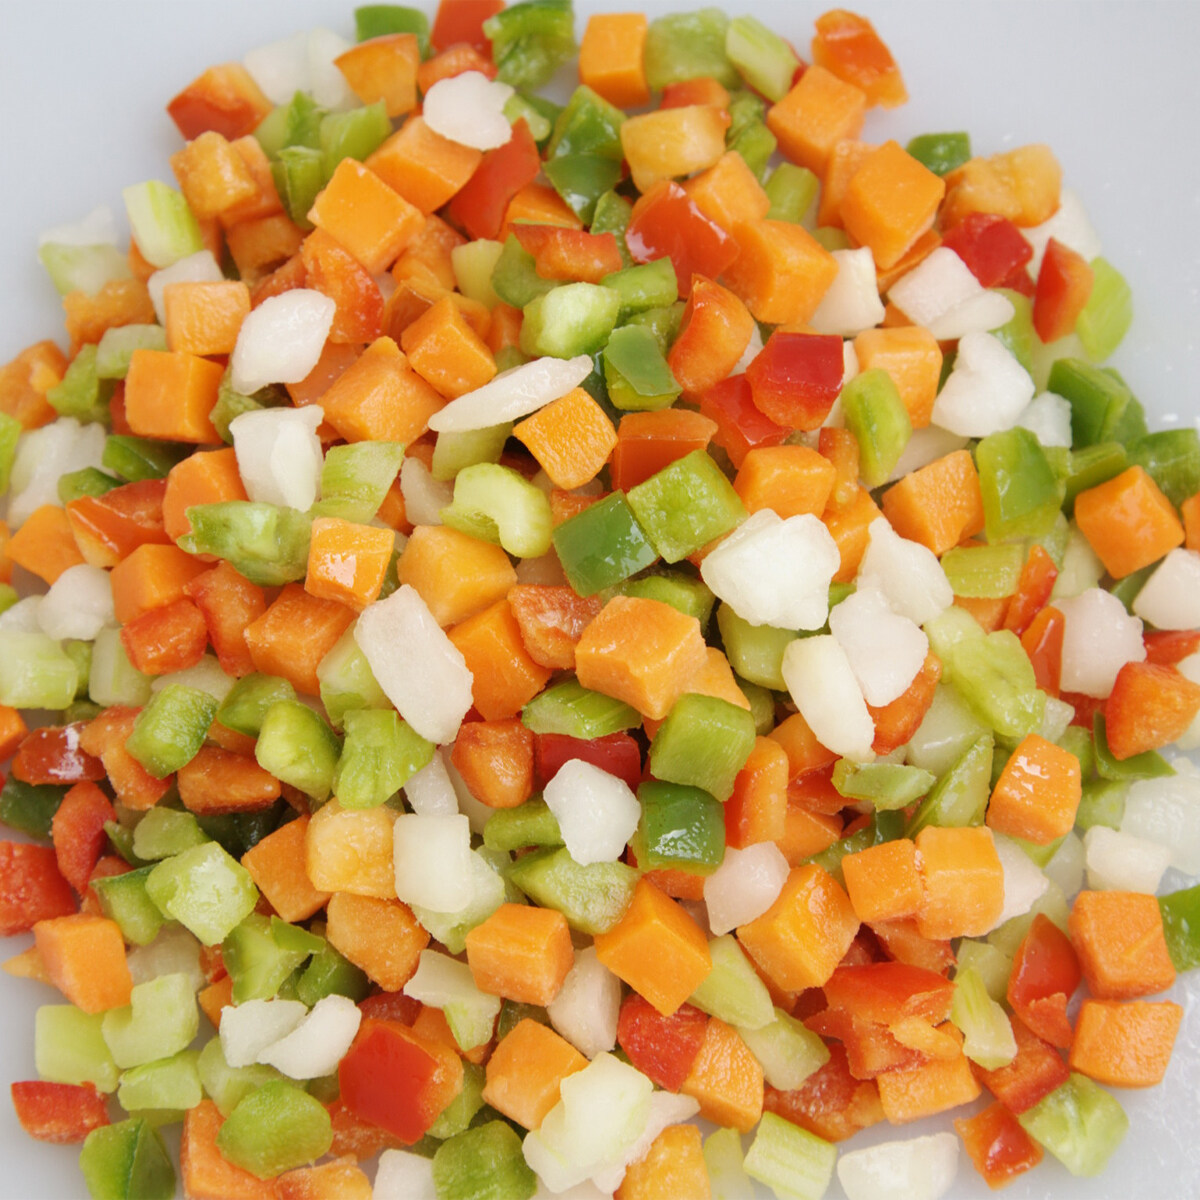 Verdure di fagioli verde di carota congelati verdure miscelate congelate